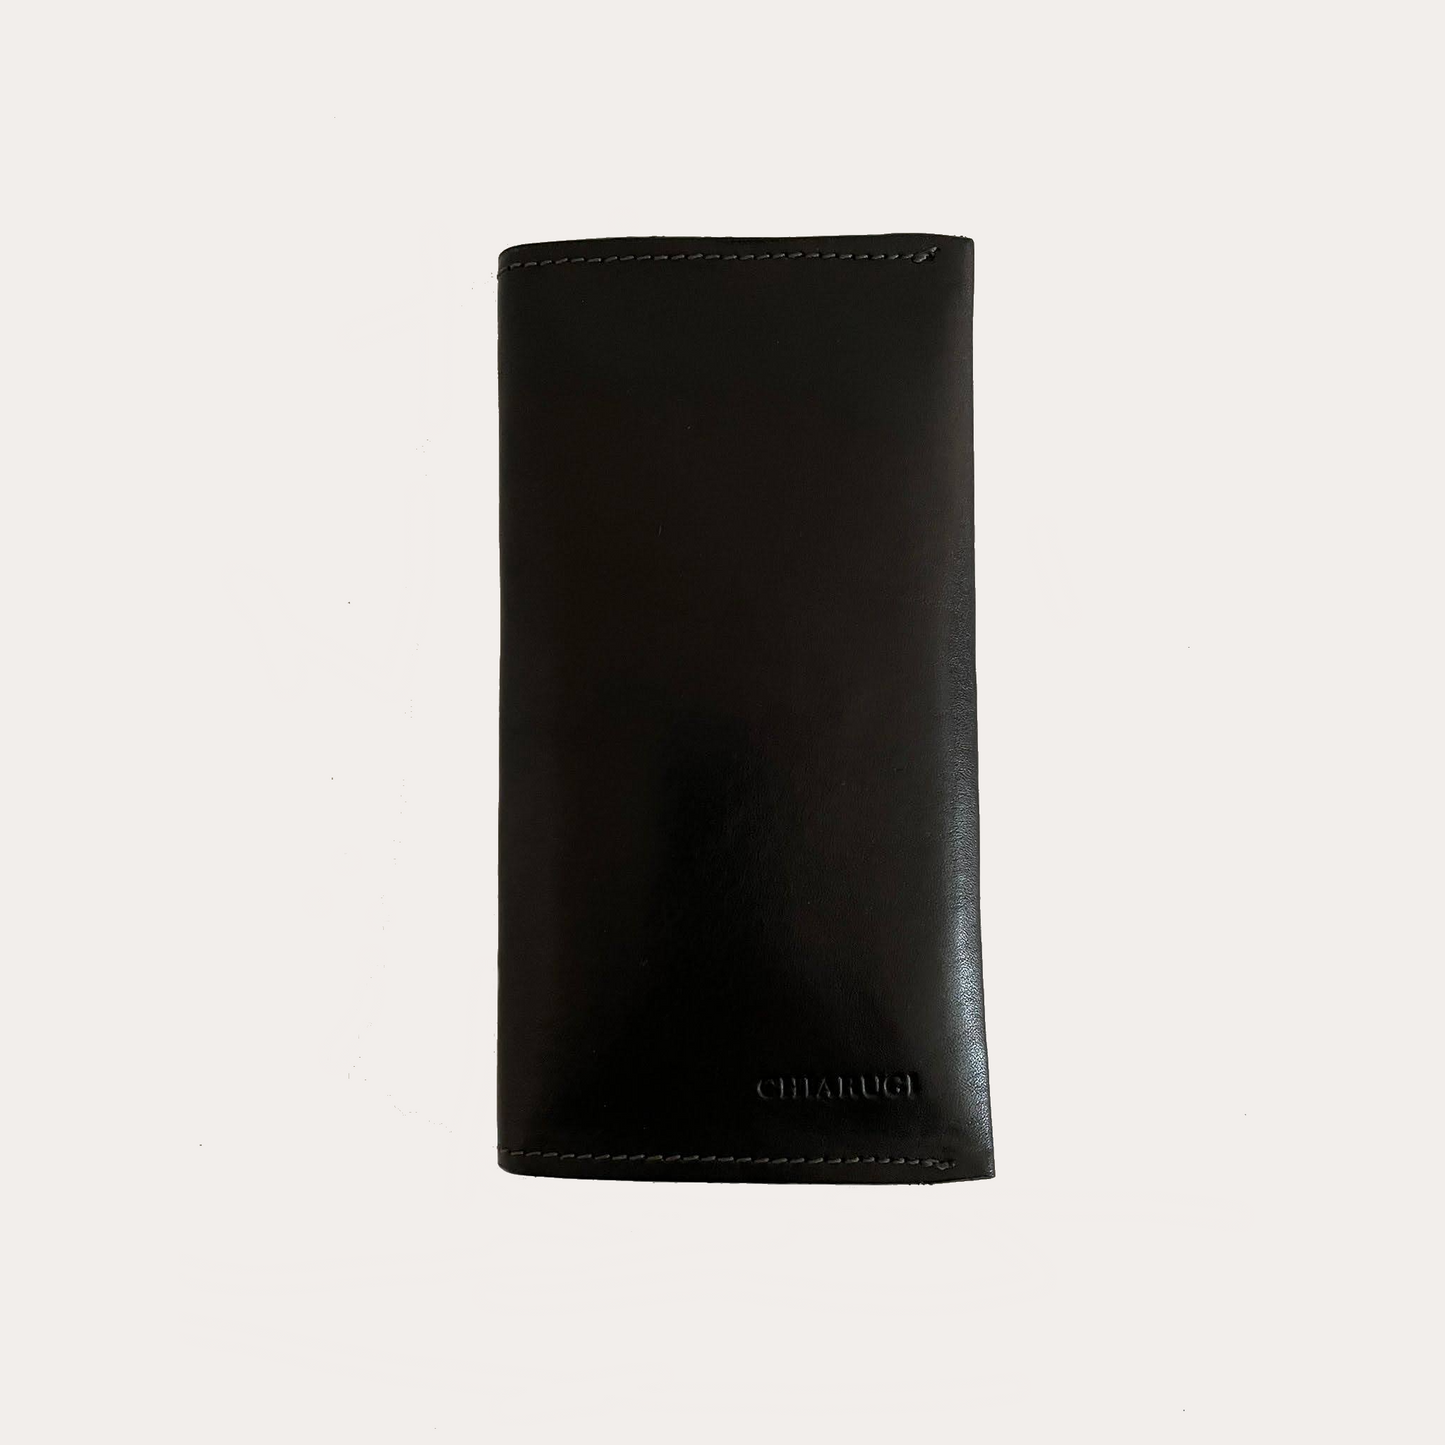 Chiarugi Black Leather Phone Wallet